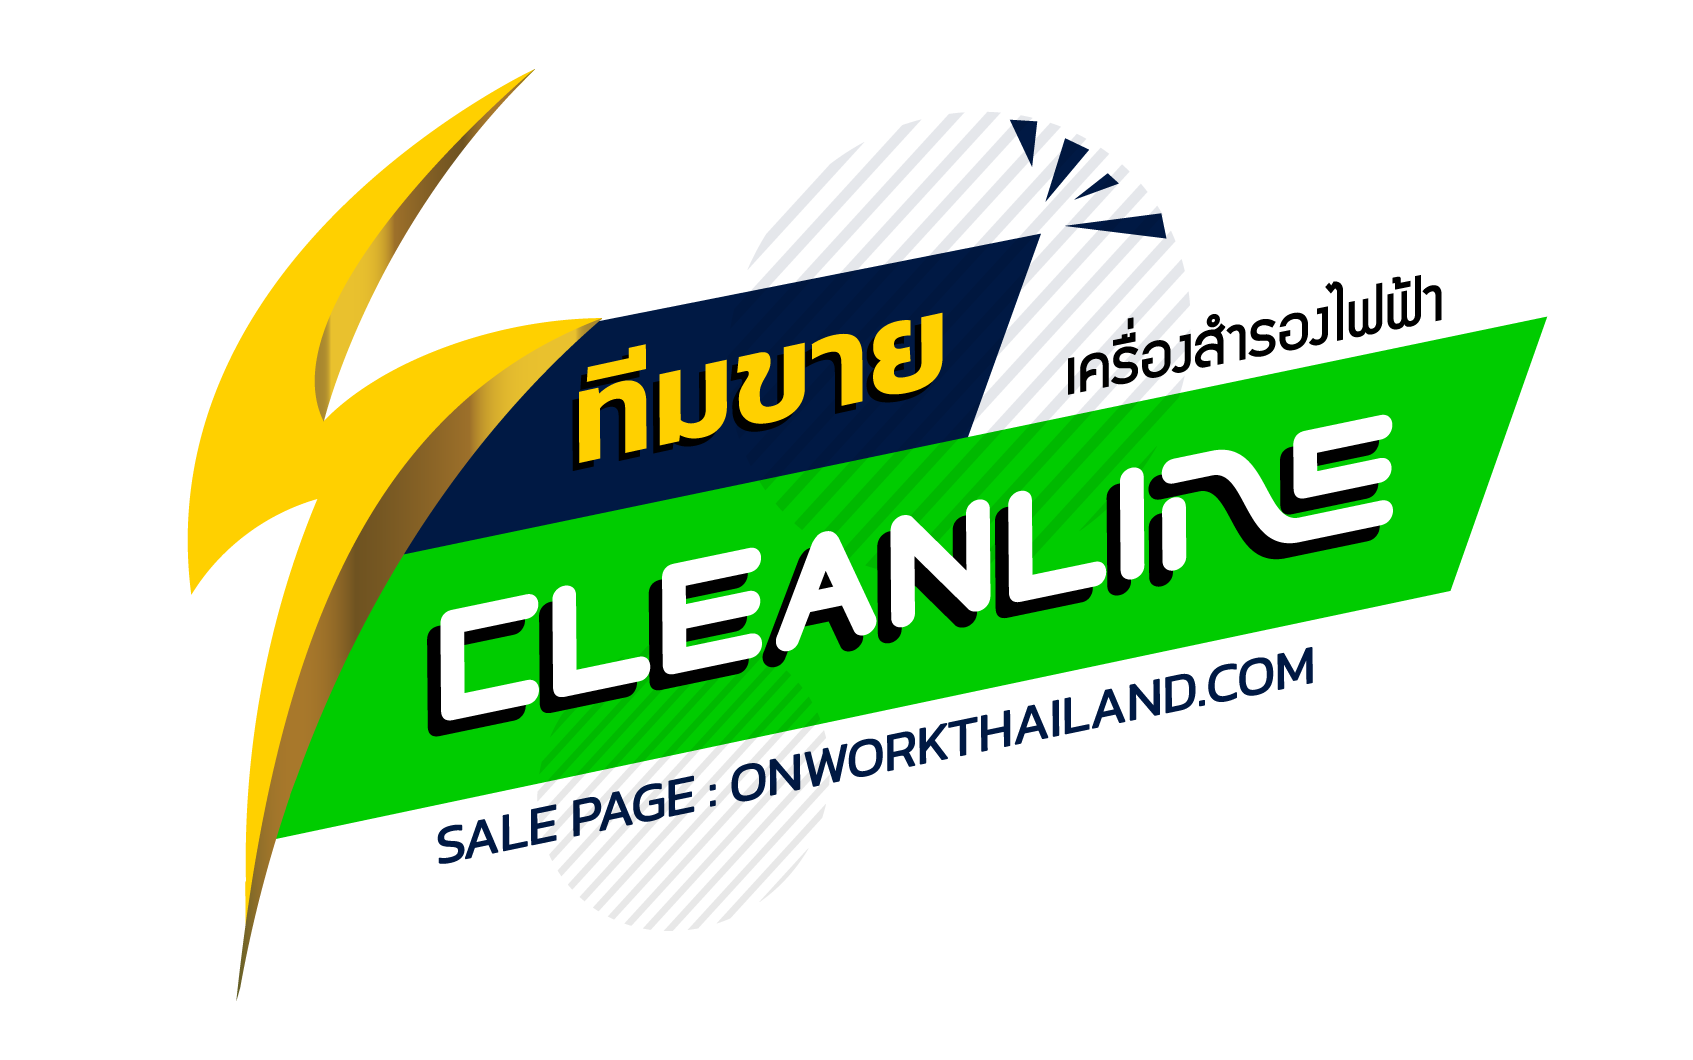 CLEANLINE UPS by onworkthailand.com